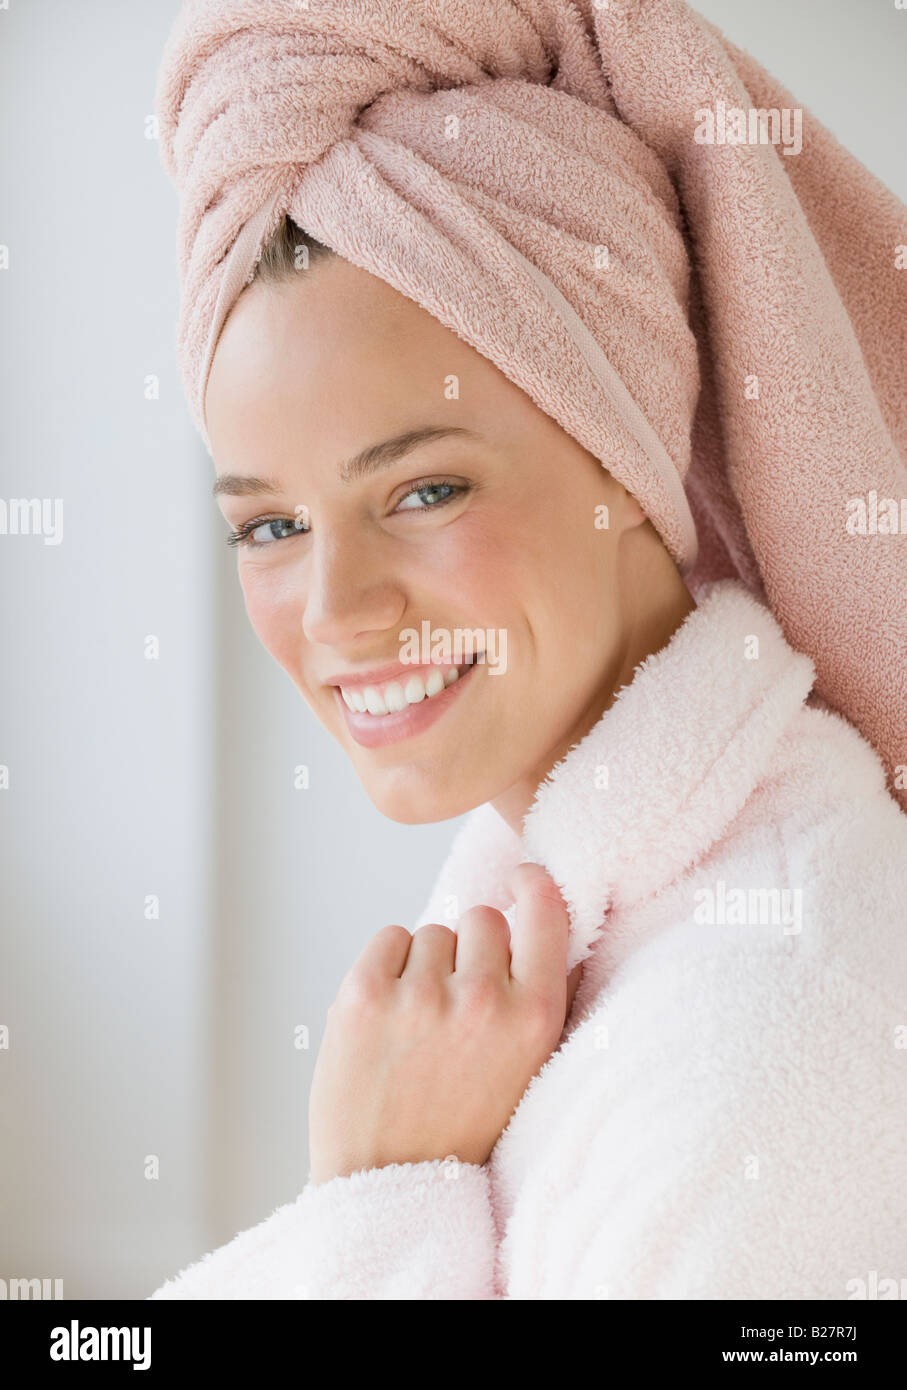 woman-with-towel-wrapped-around-hair-B27R7J.jpg